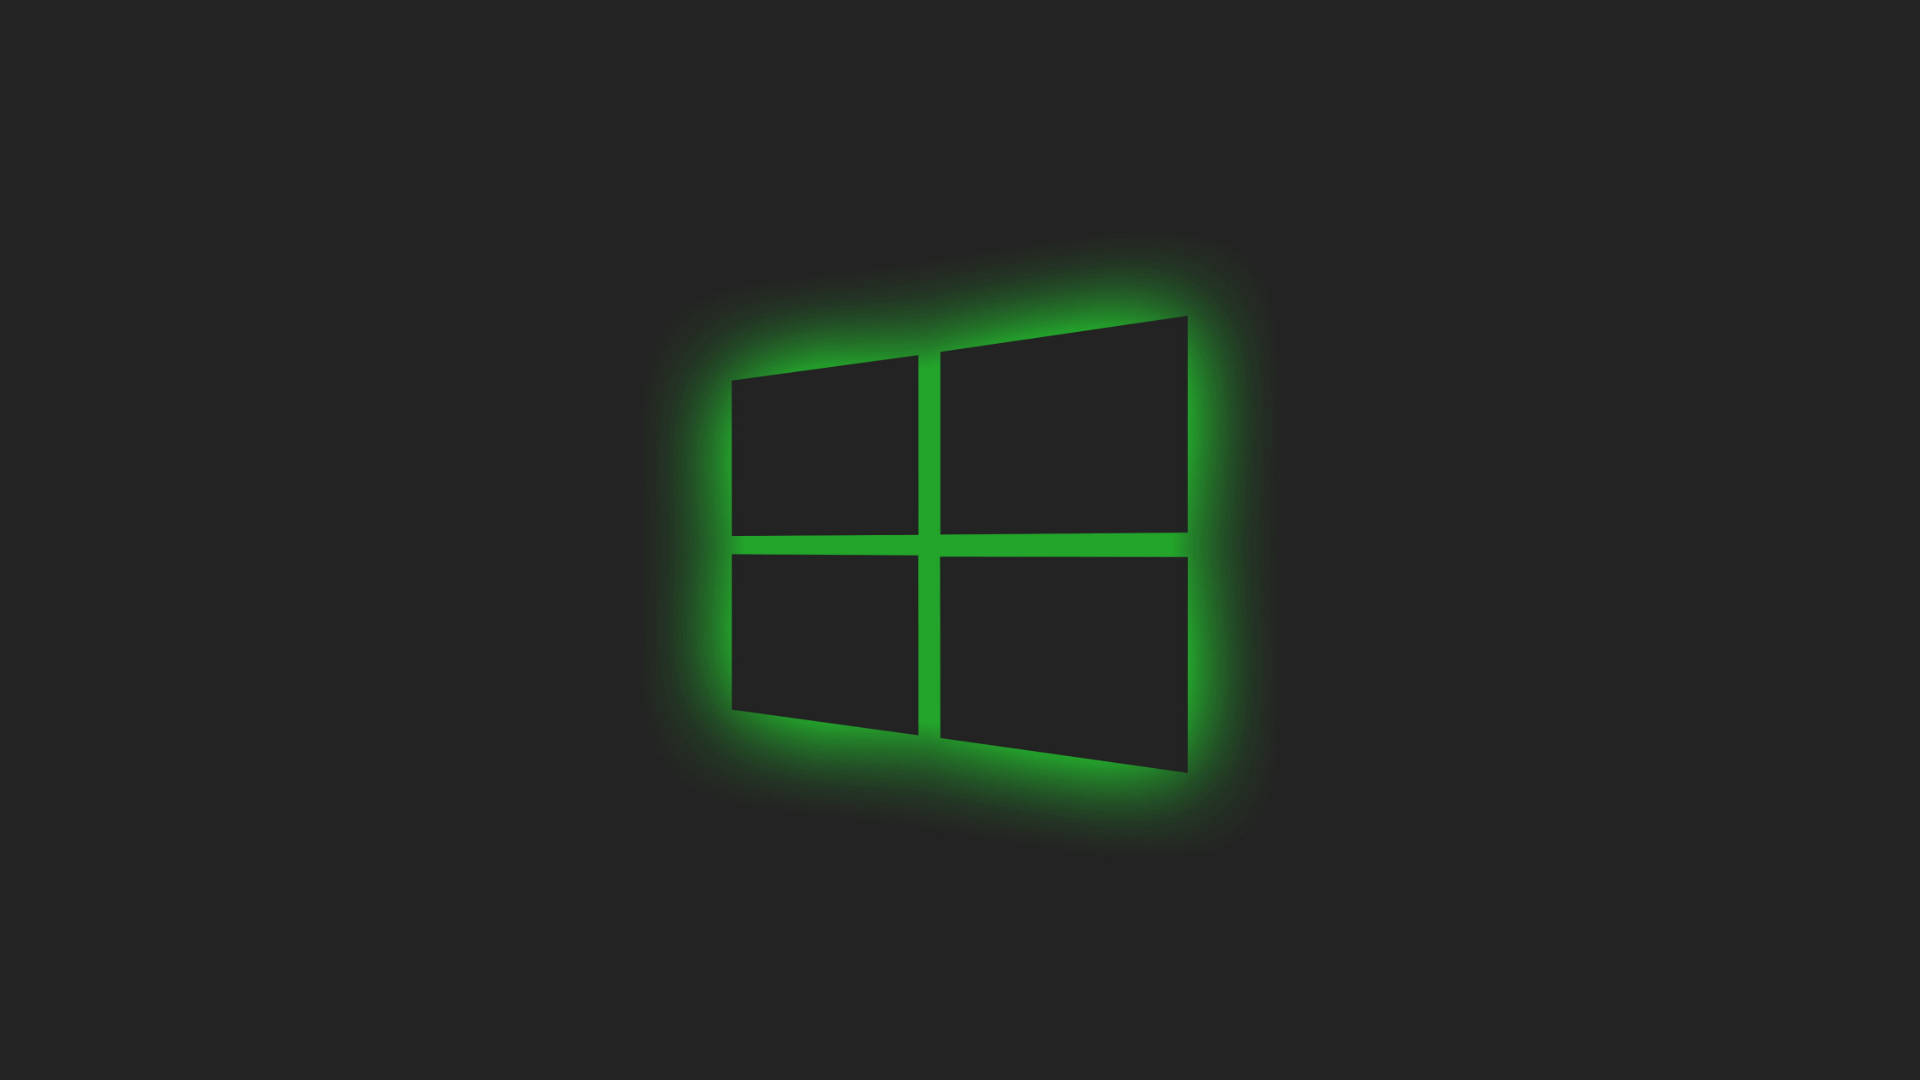 Free Black Windows 10 Hd Wallpaper Downloads, [100+] Black Windows 10 Hd  Wallpapers for FREE 